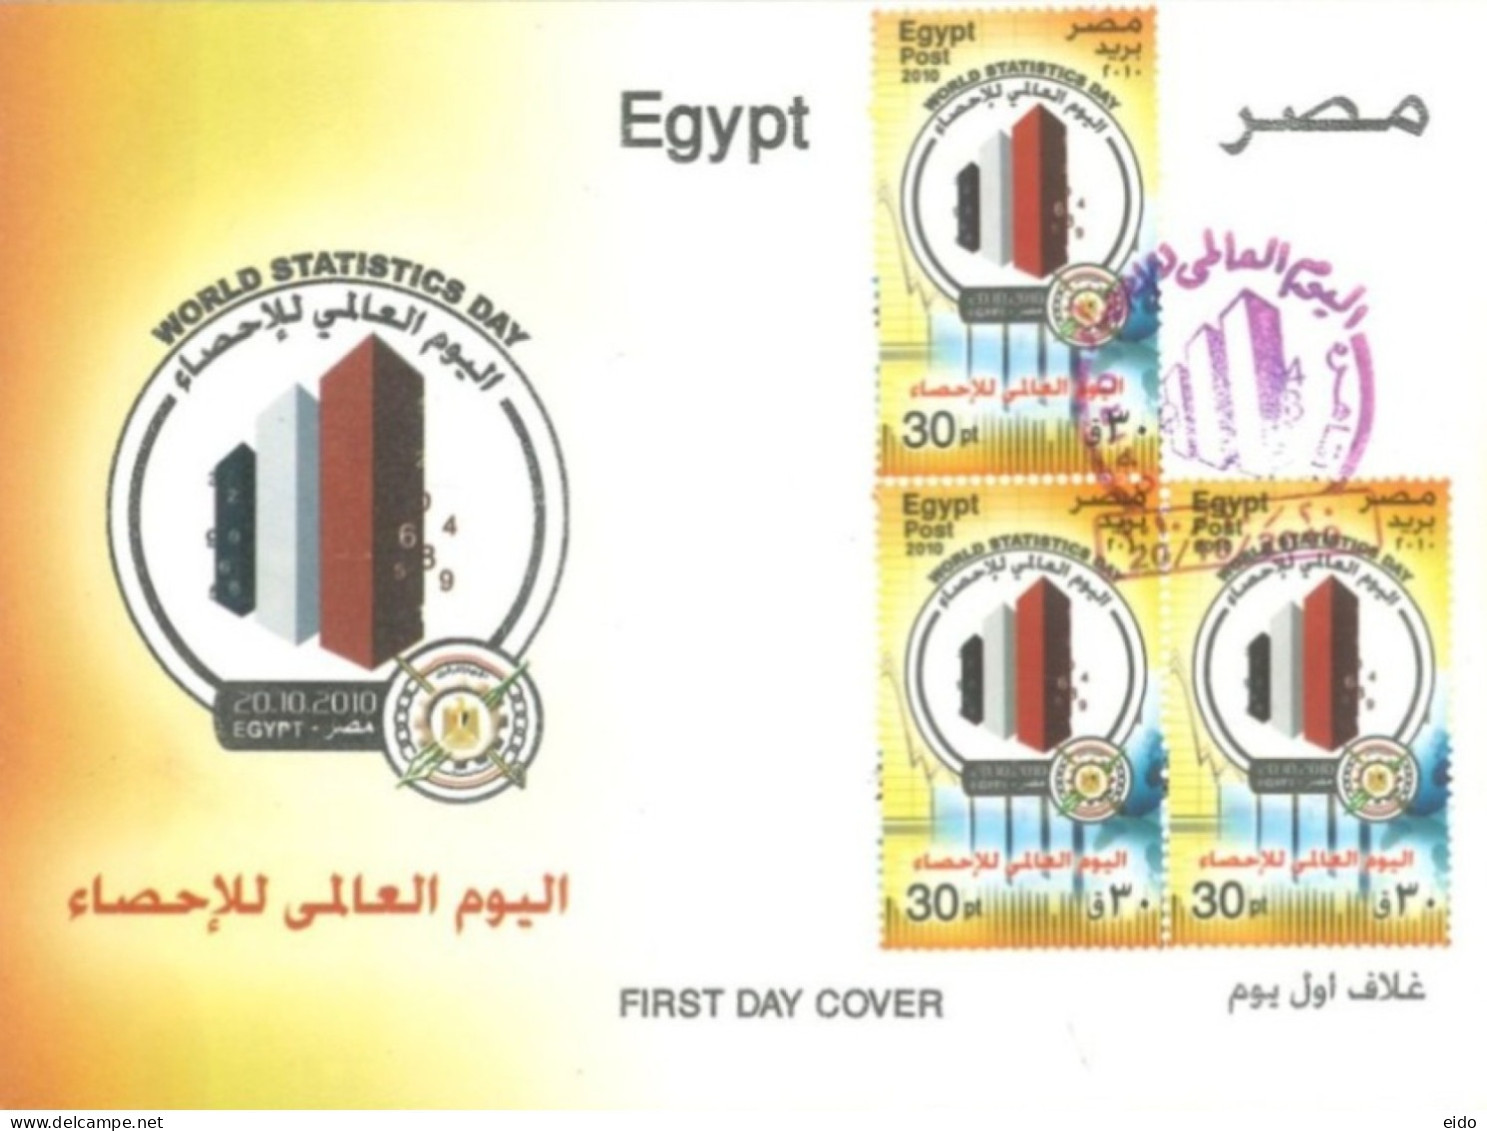 EGYPT - 2010, F.D.C. STAMPS OF WORLD STATISTICS DAY. - Briefe U. Dokumente